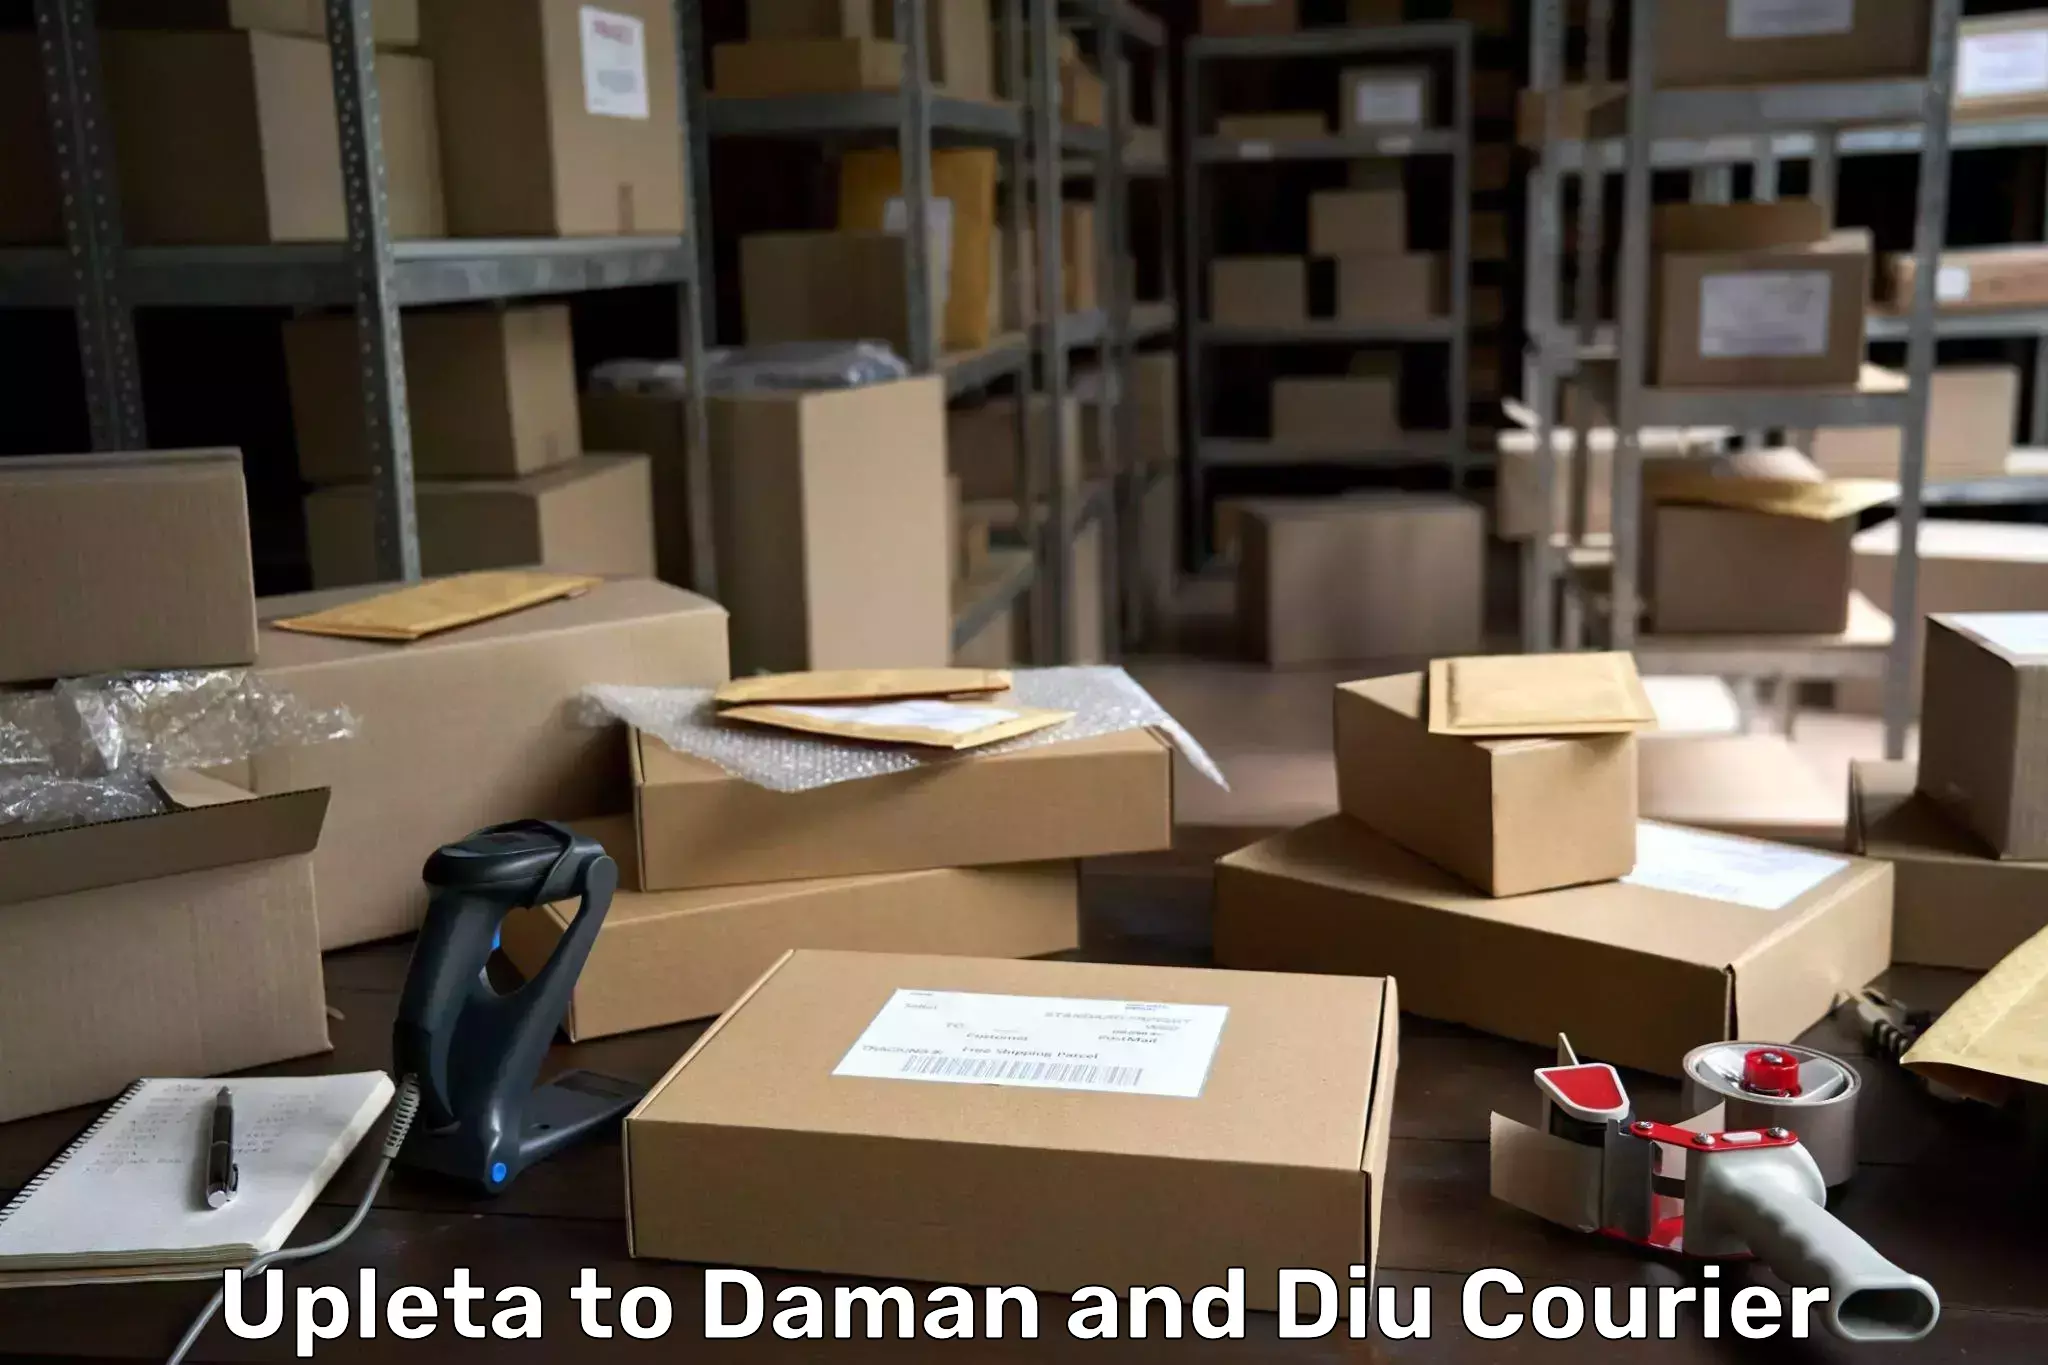 Courier service partnerships Upleta to Daman and Diu